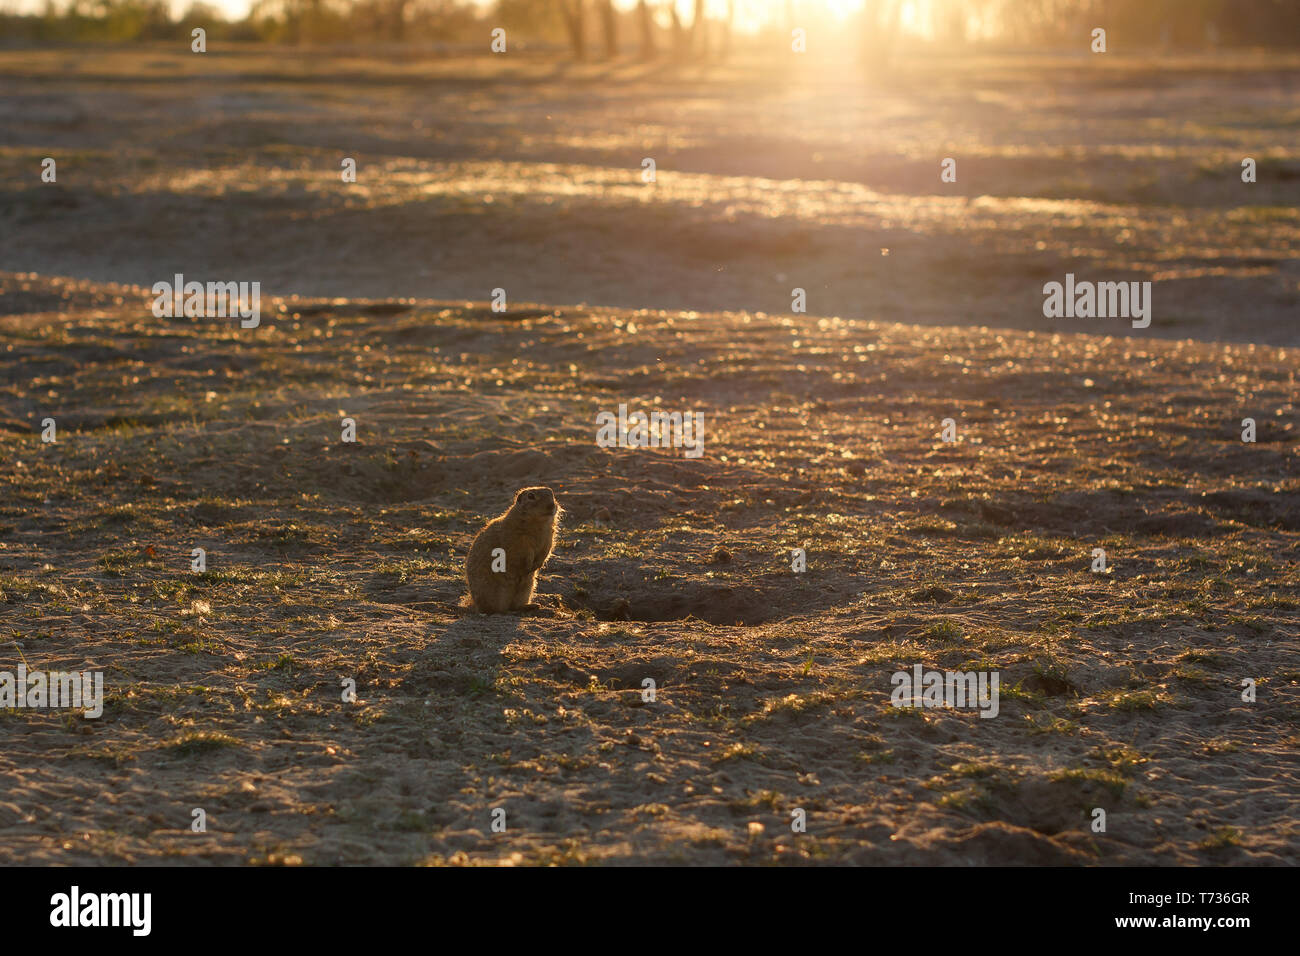 European ground squirrel standing in the field. Spermophilus citellus wildlife scene from nature. European souslik on meadow. Stock Photo